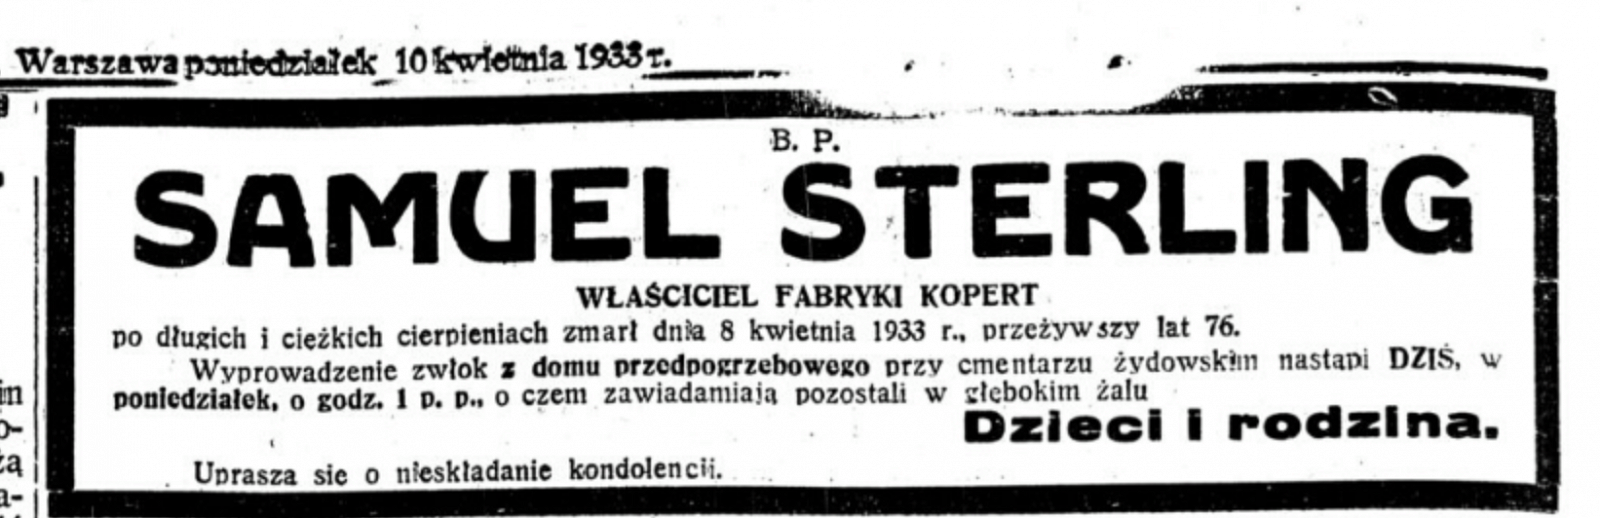 kopaliński_nekrolog_ojca_polona_1933.png [576.99 KB]